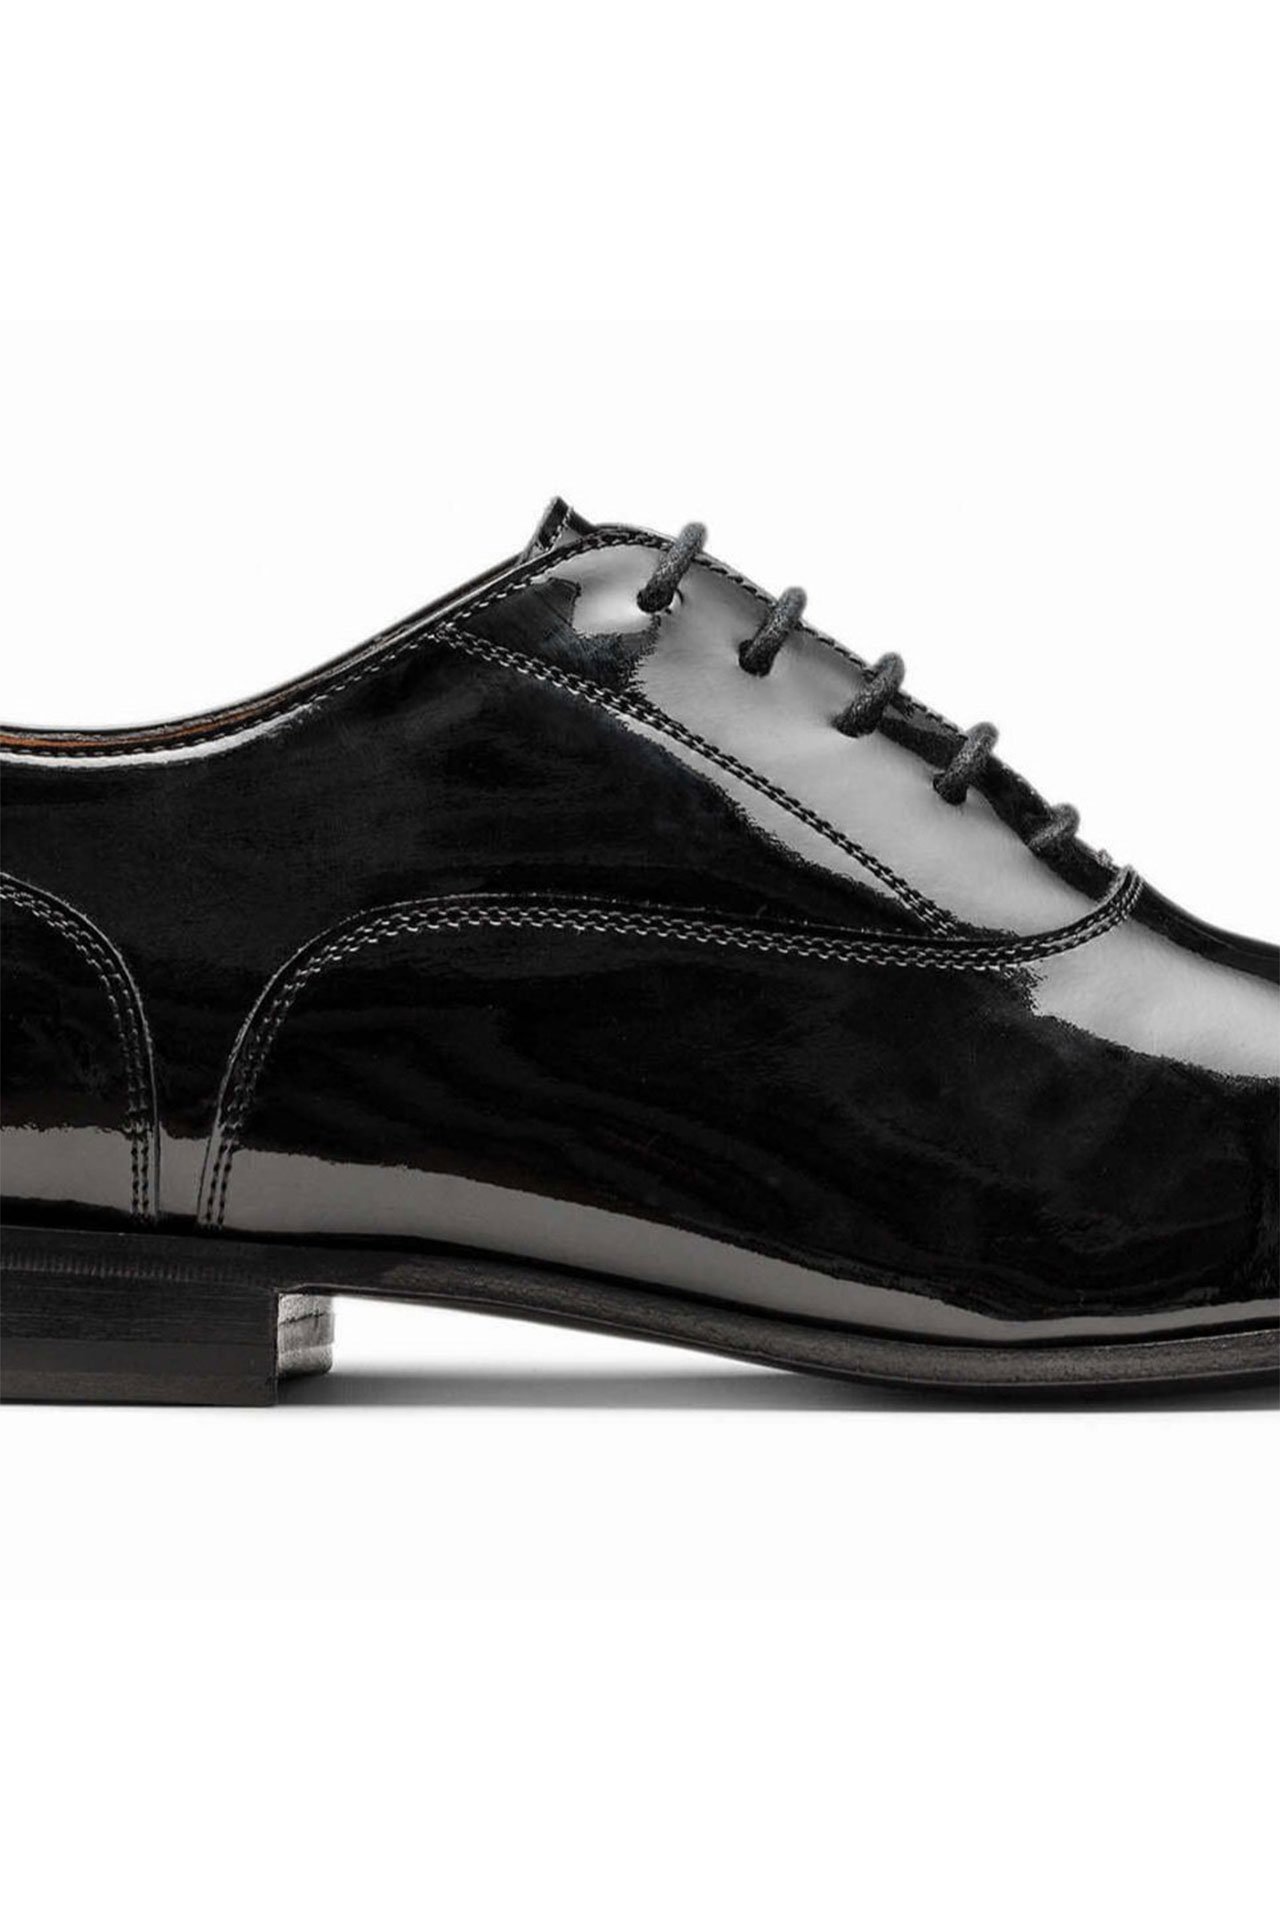 Handmade Men's Genuine Black Patent Leather Tassels Slip On Moccasins Shoes  | Dress shoes men, Loafers men, Leather shoes men